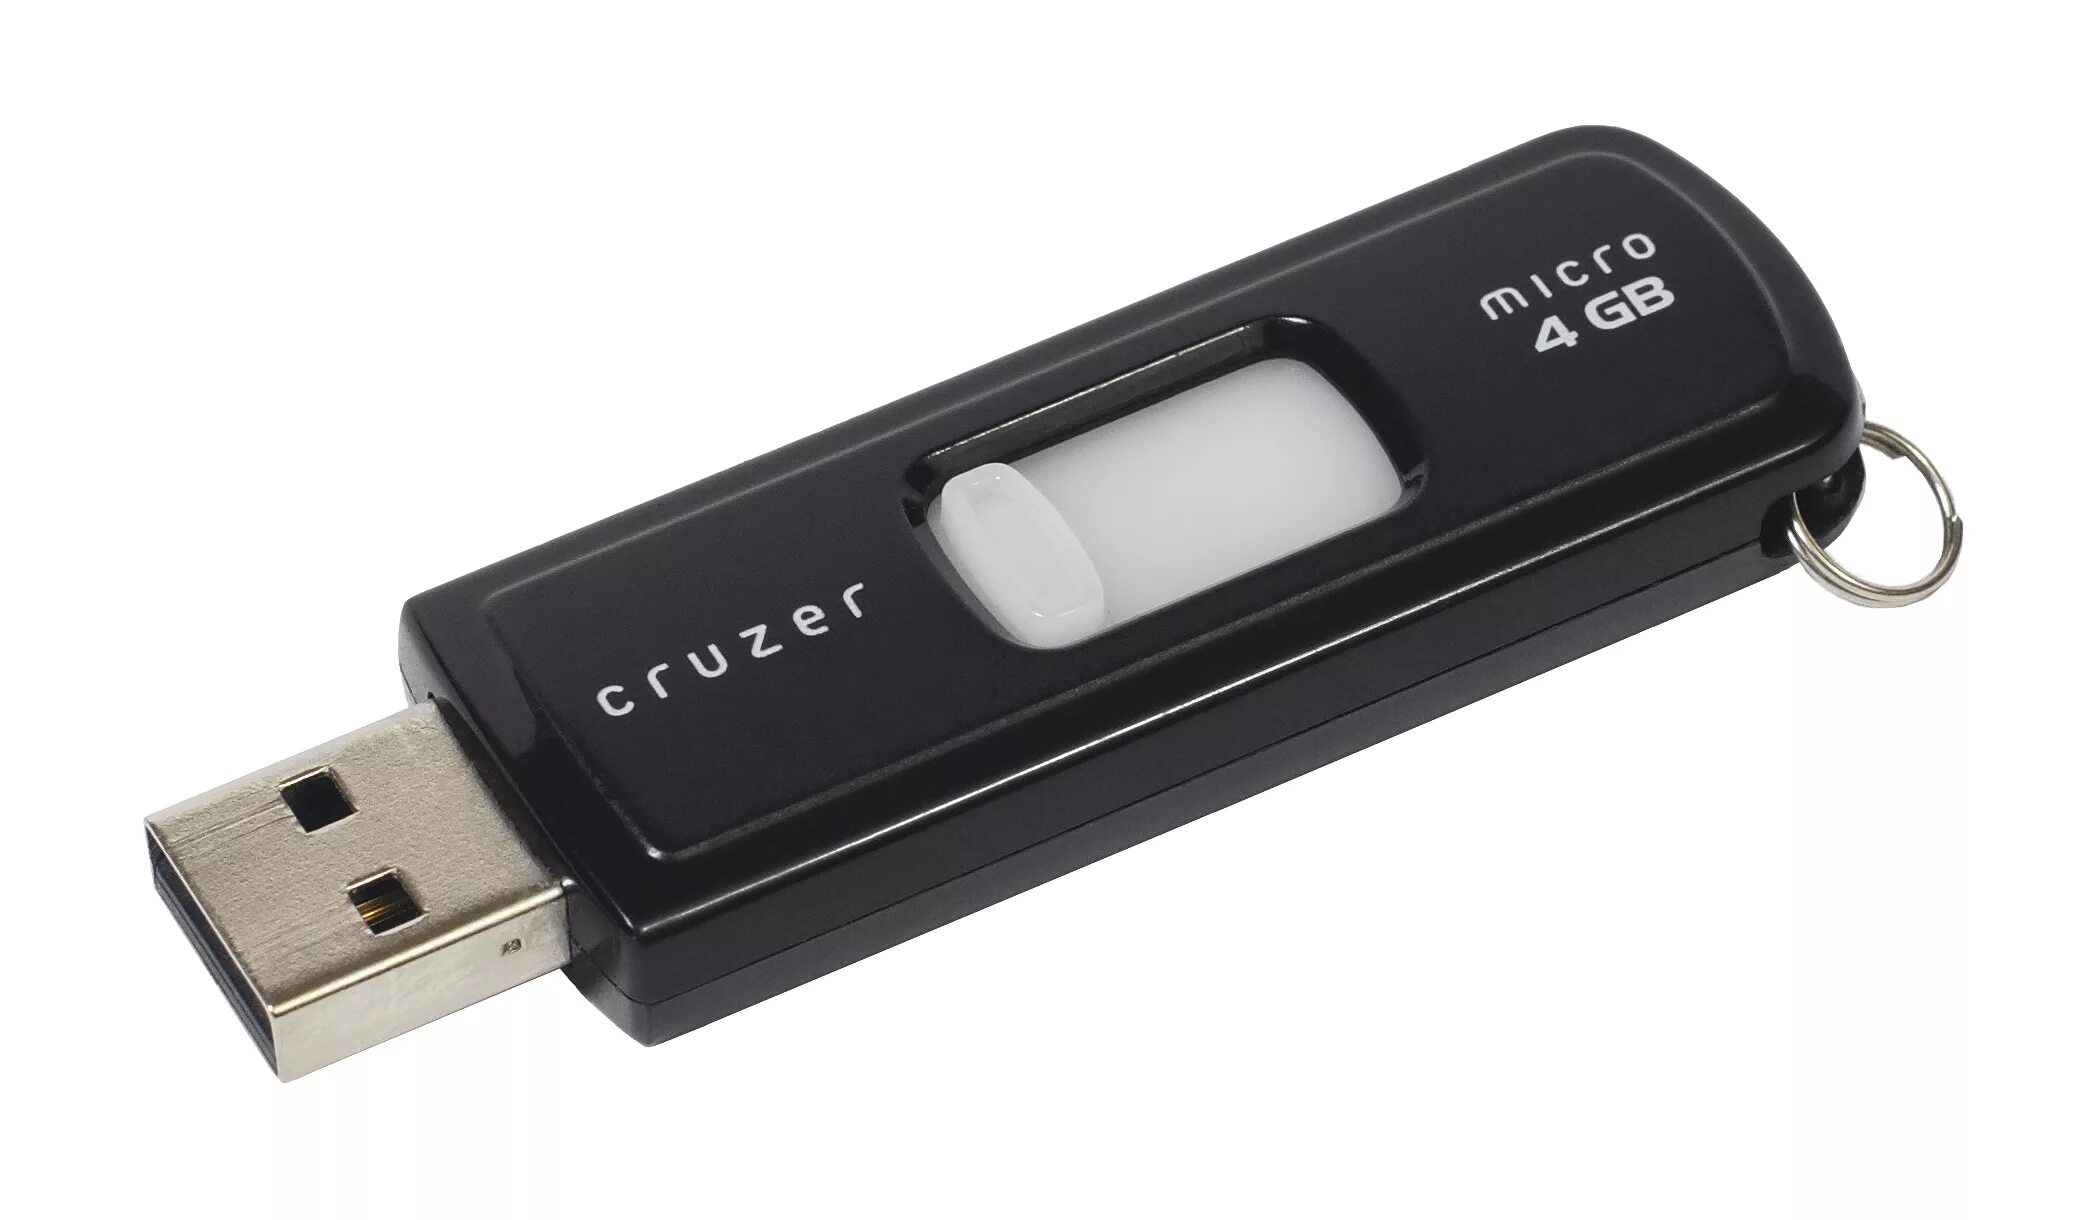 Флеш память носитель. Флешка SANDISK 4gb. Флешка 16гб USB тайп. SANDISK Cruzer Micro 4gb. USB Flash накопитель 4 GB.